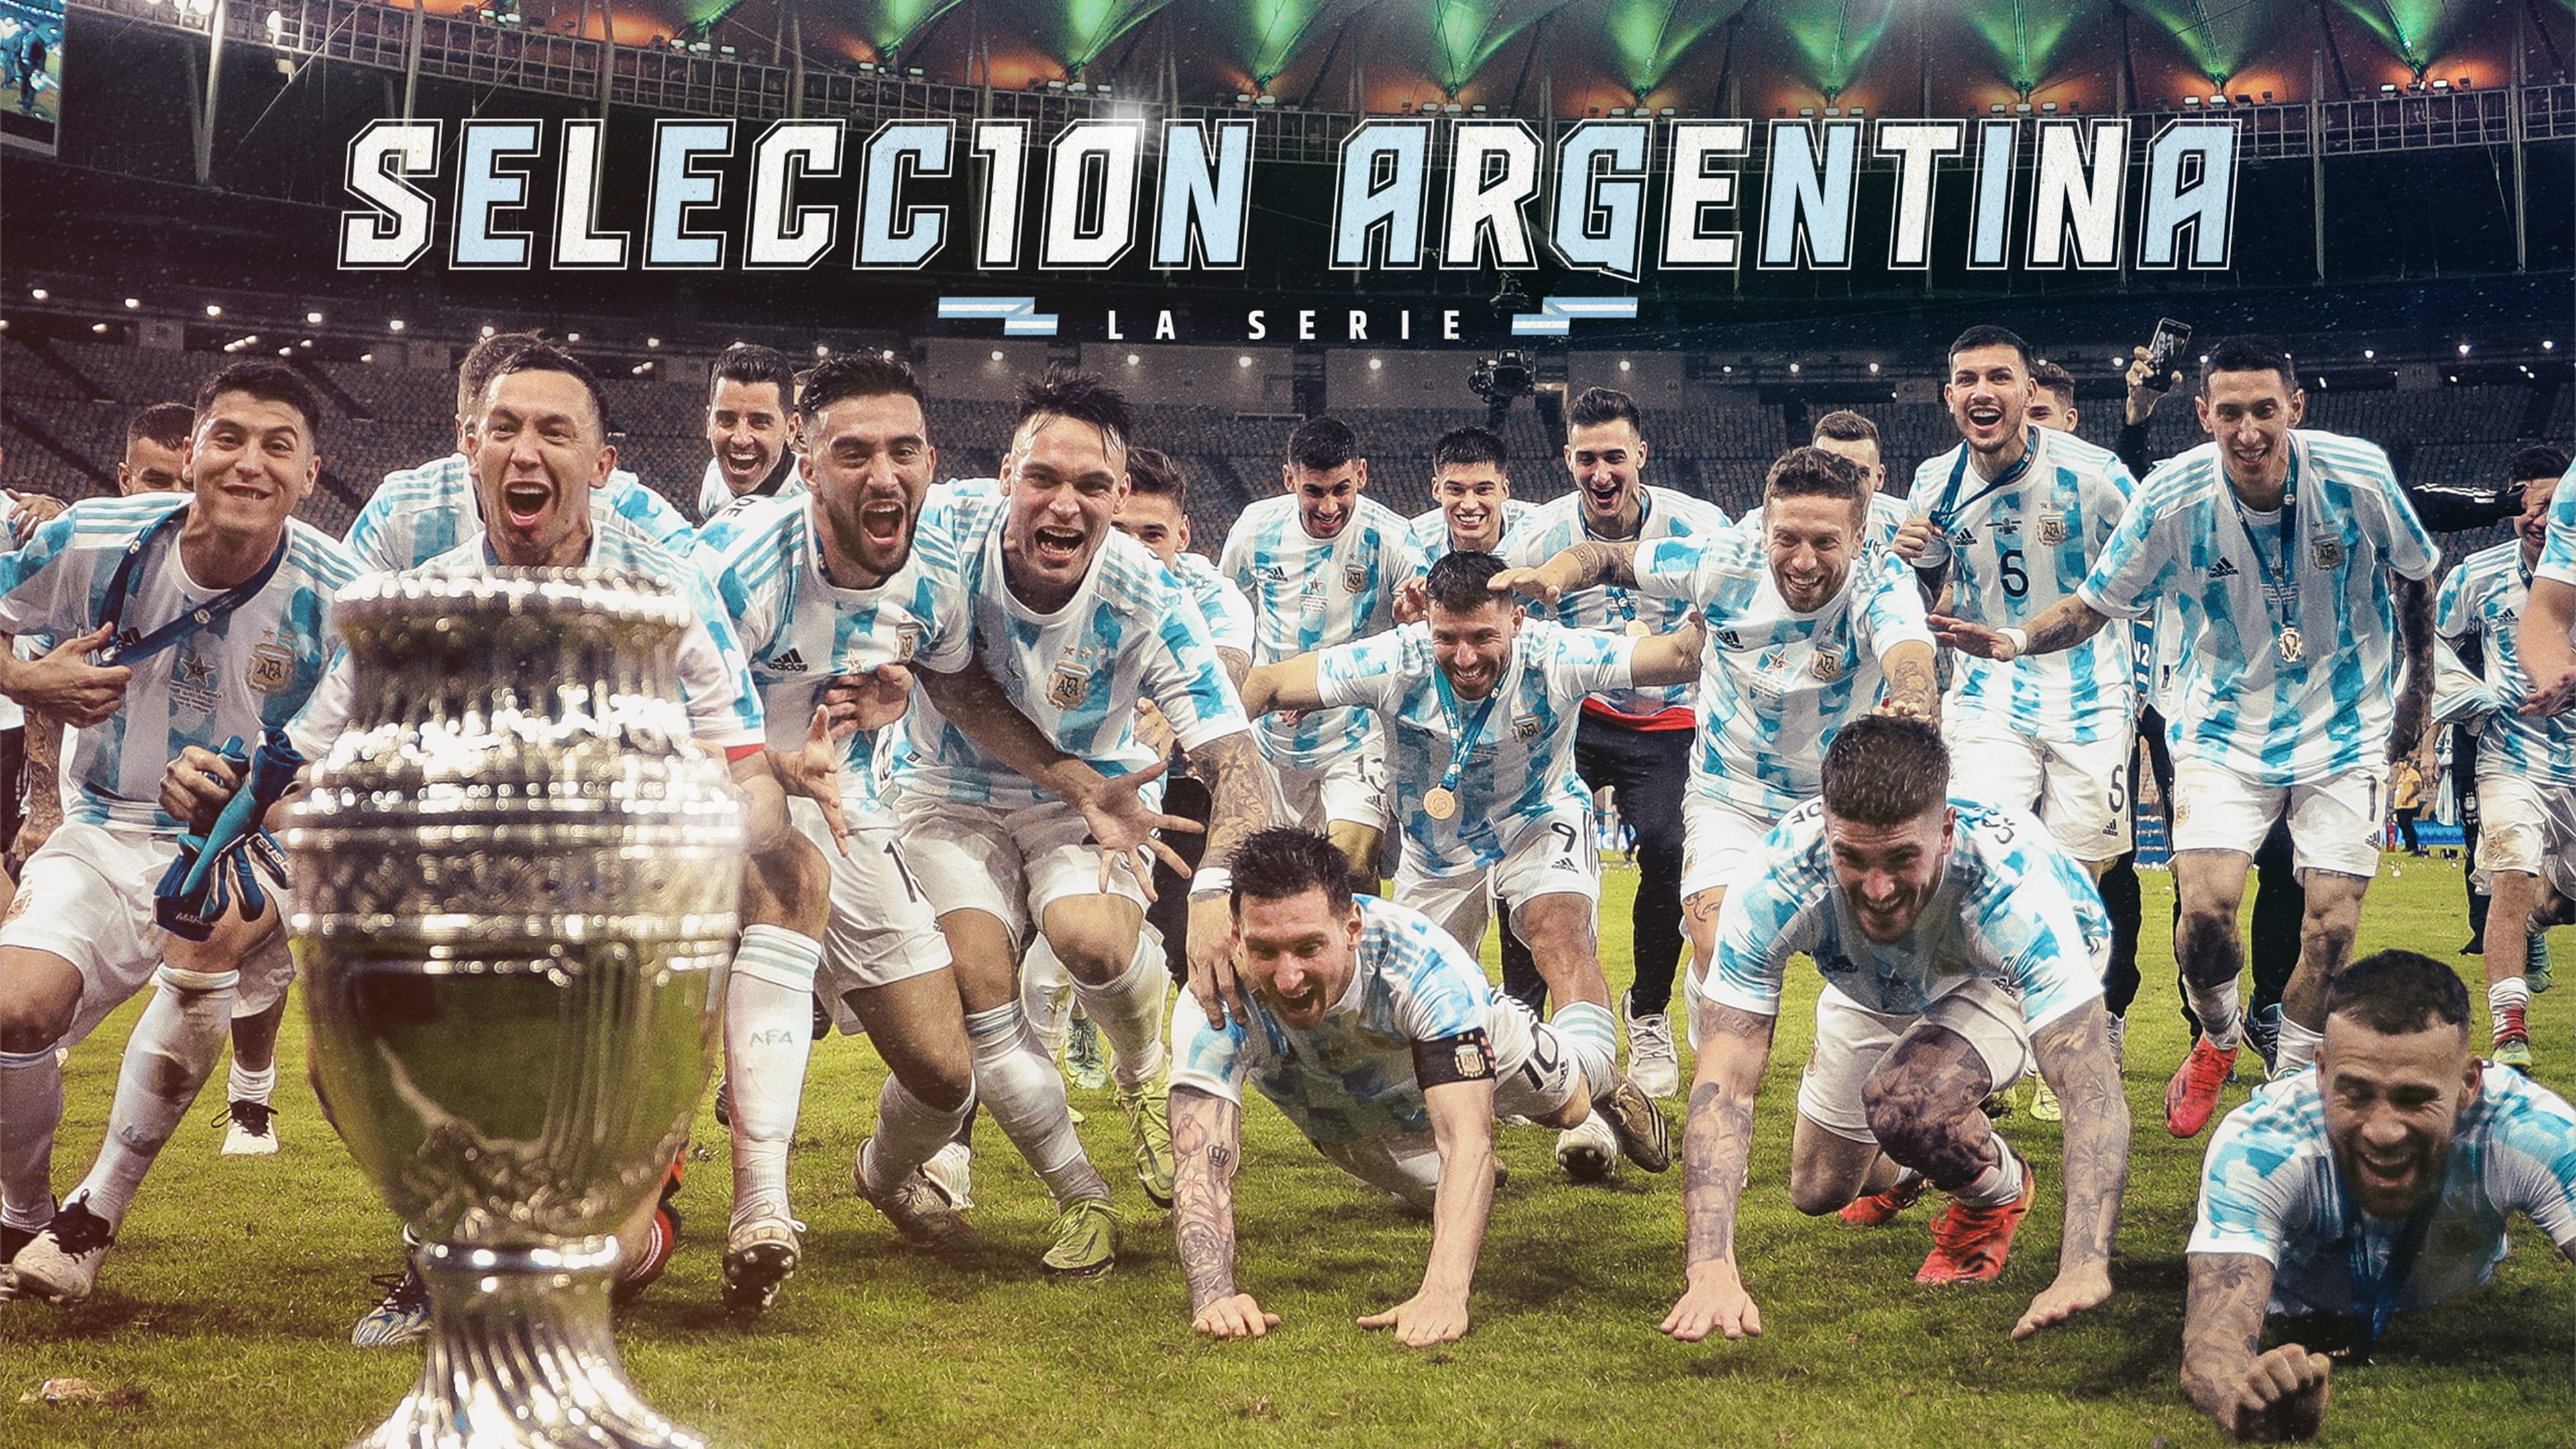 Selección Argentina, la serie – Camino a Qatar